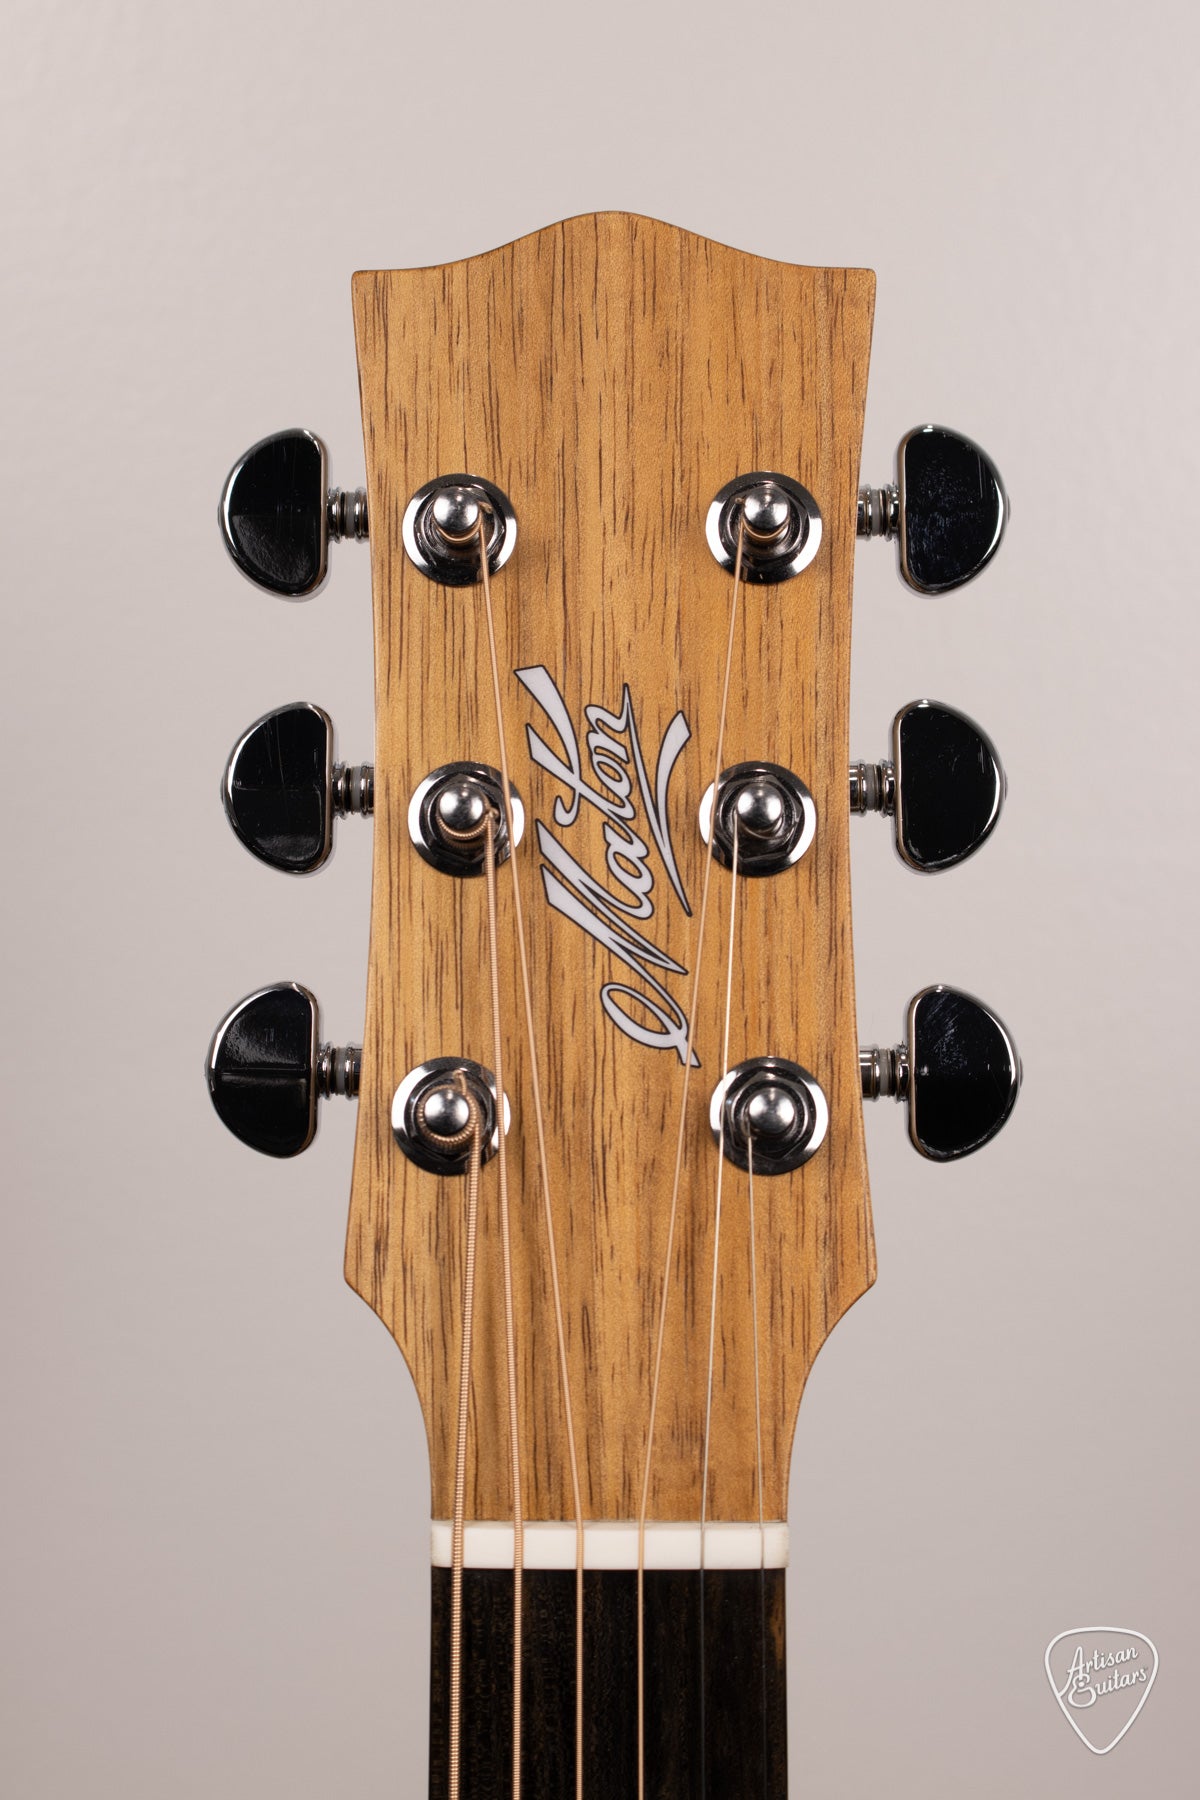 Maton Guitars Solid Road Series SRS-808C - 16520